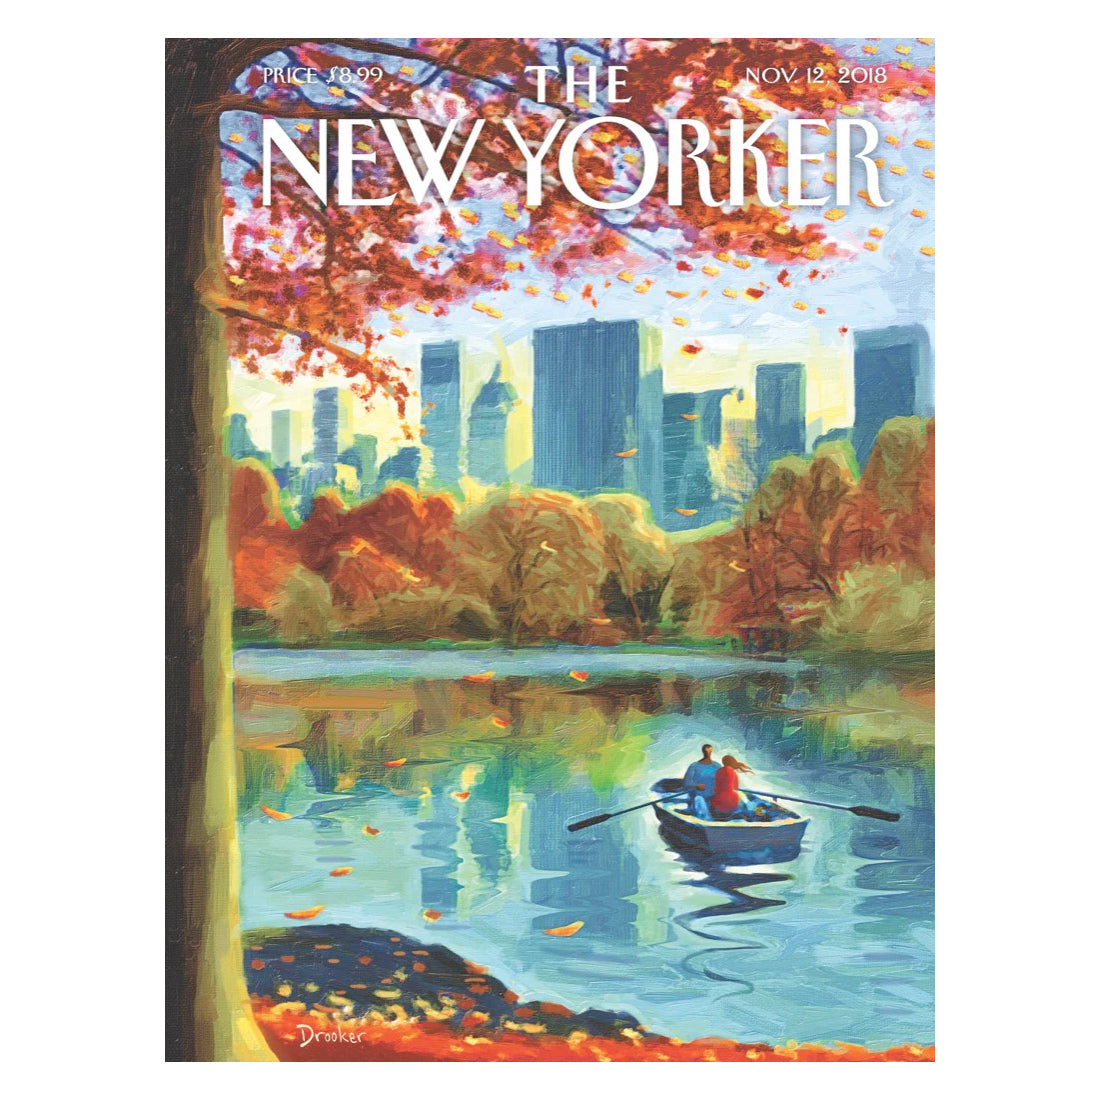 Puzzel Central Park Row│New York Puzzle Company│the New Yorker│art. NPZNY1950│afbeelding illustratie